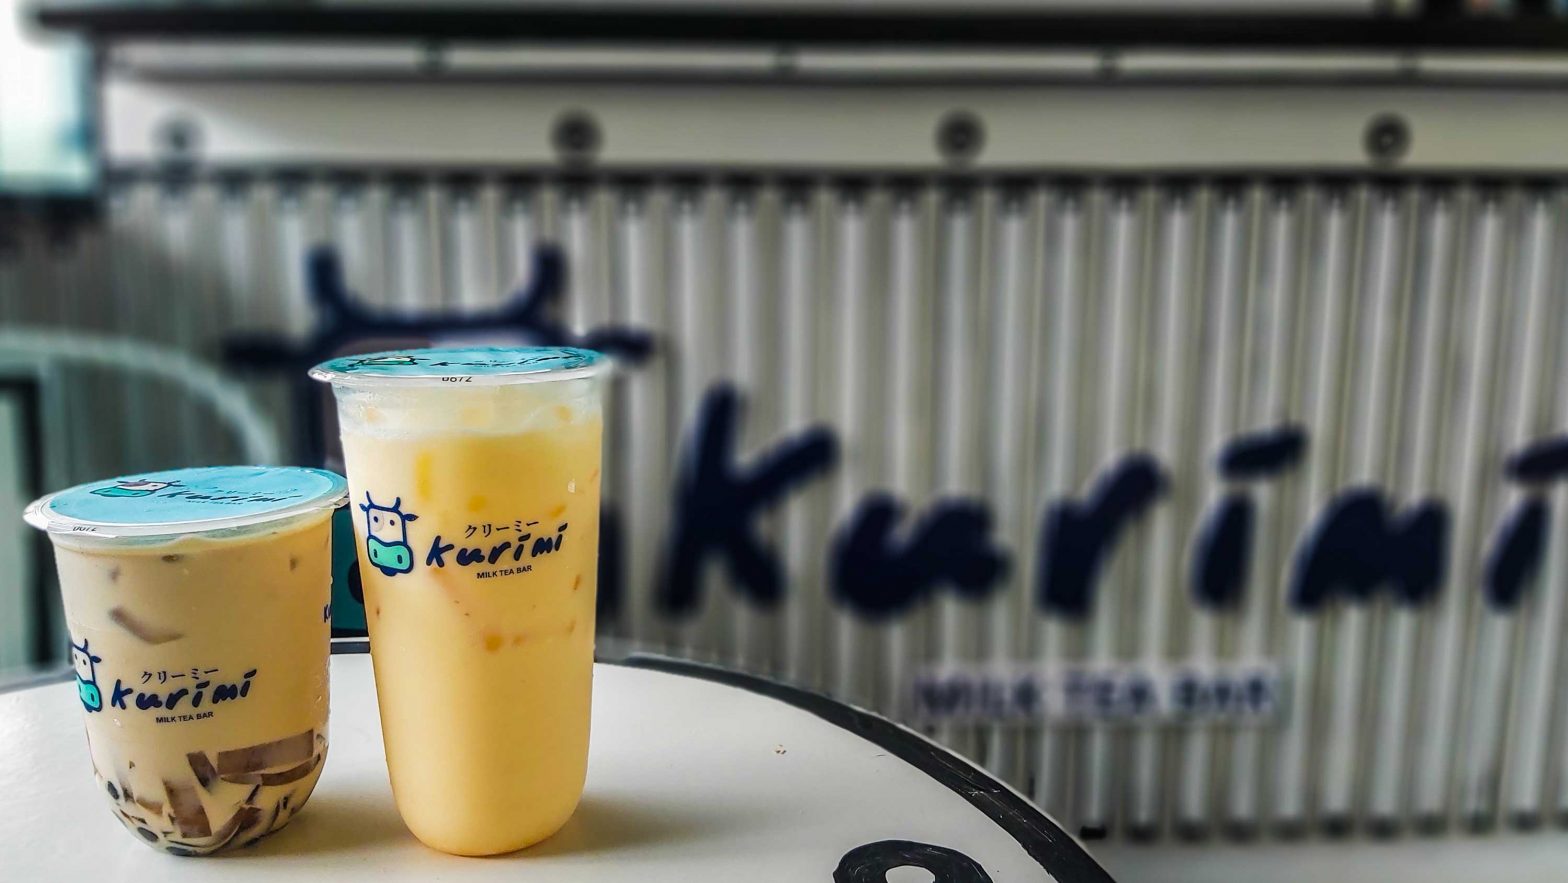 Latest milk tea destination Kurimi features premium drinks, gelato offerings